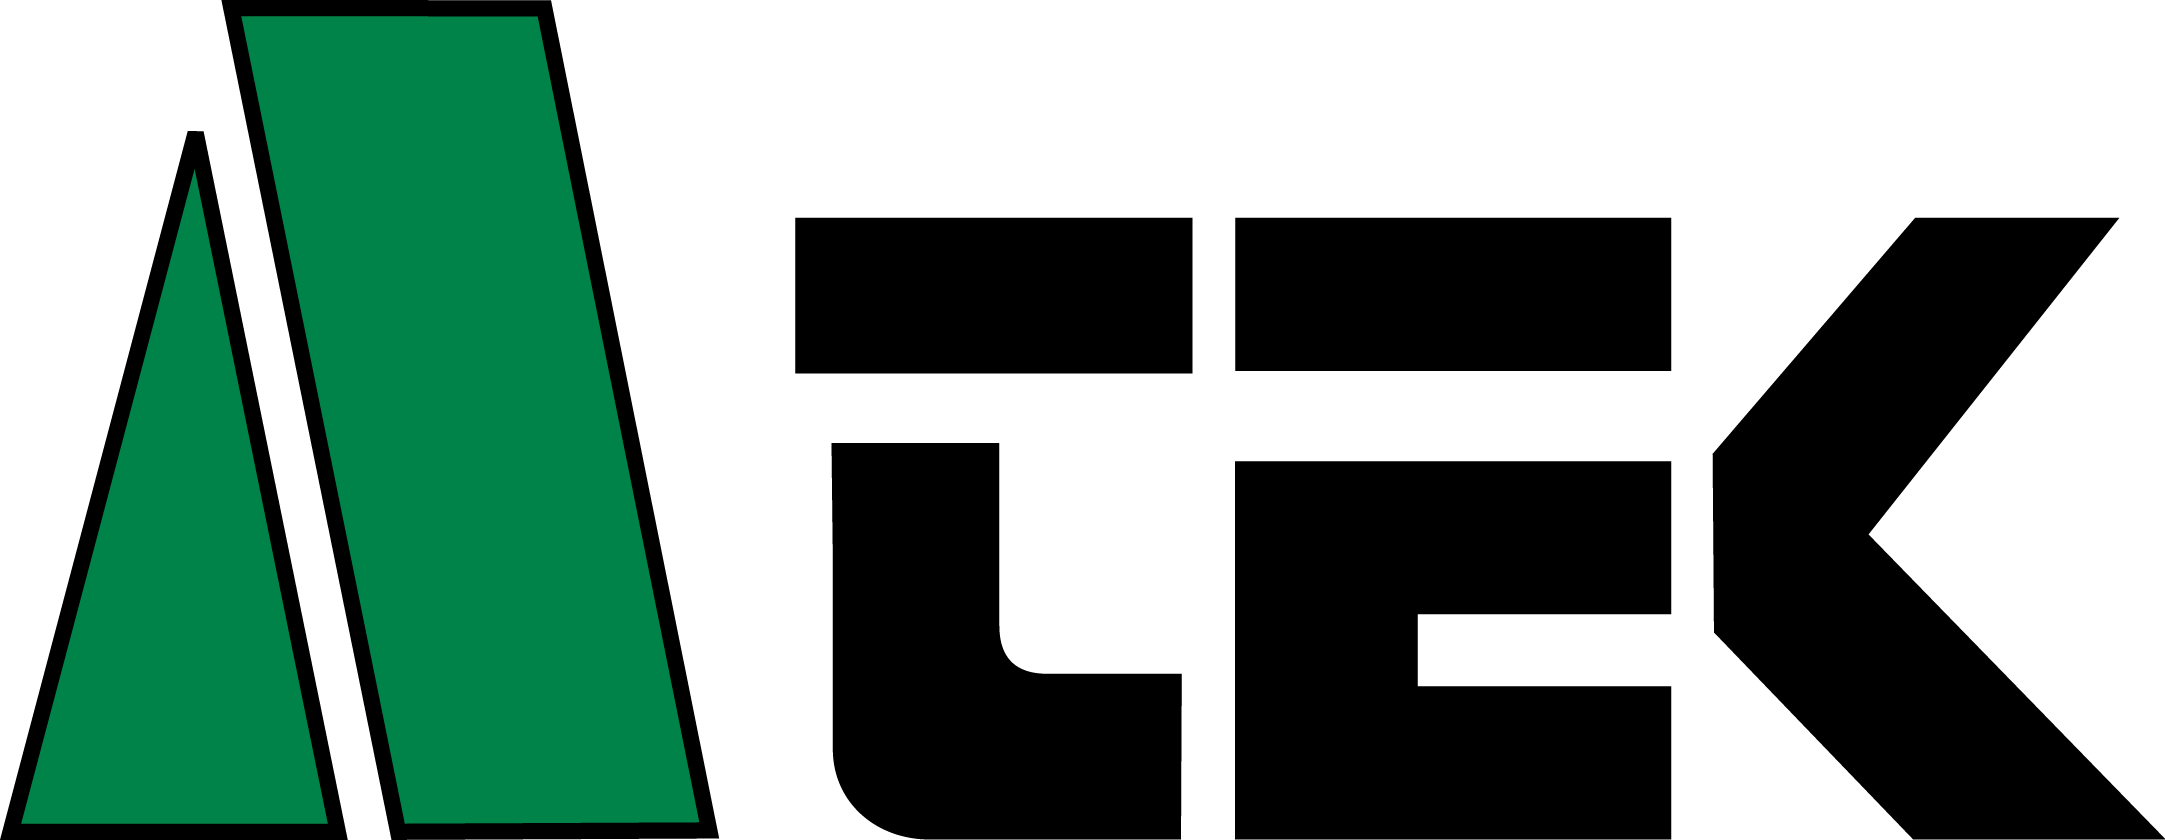 Atek logo